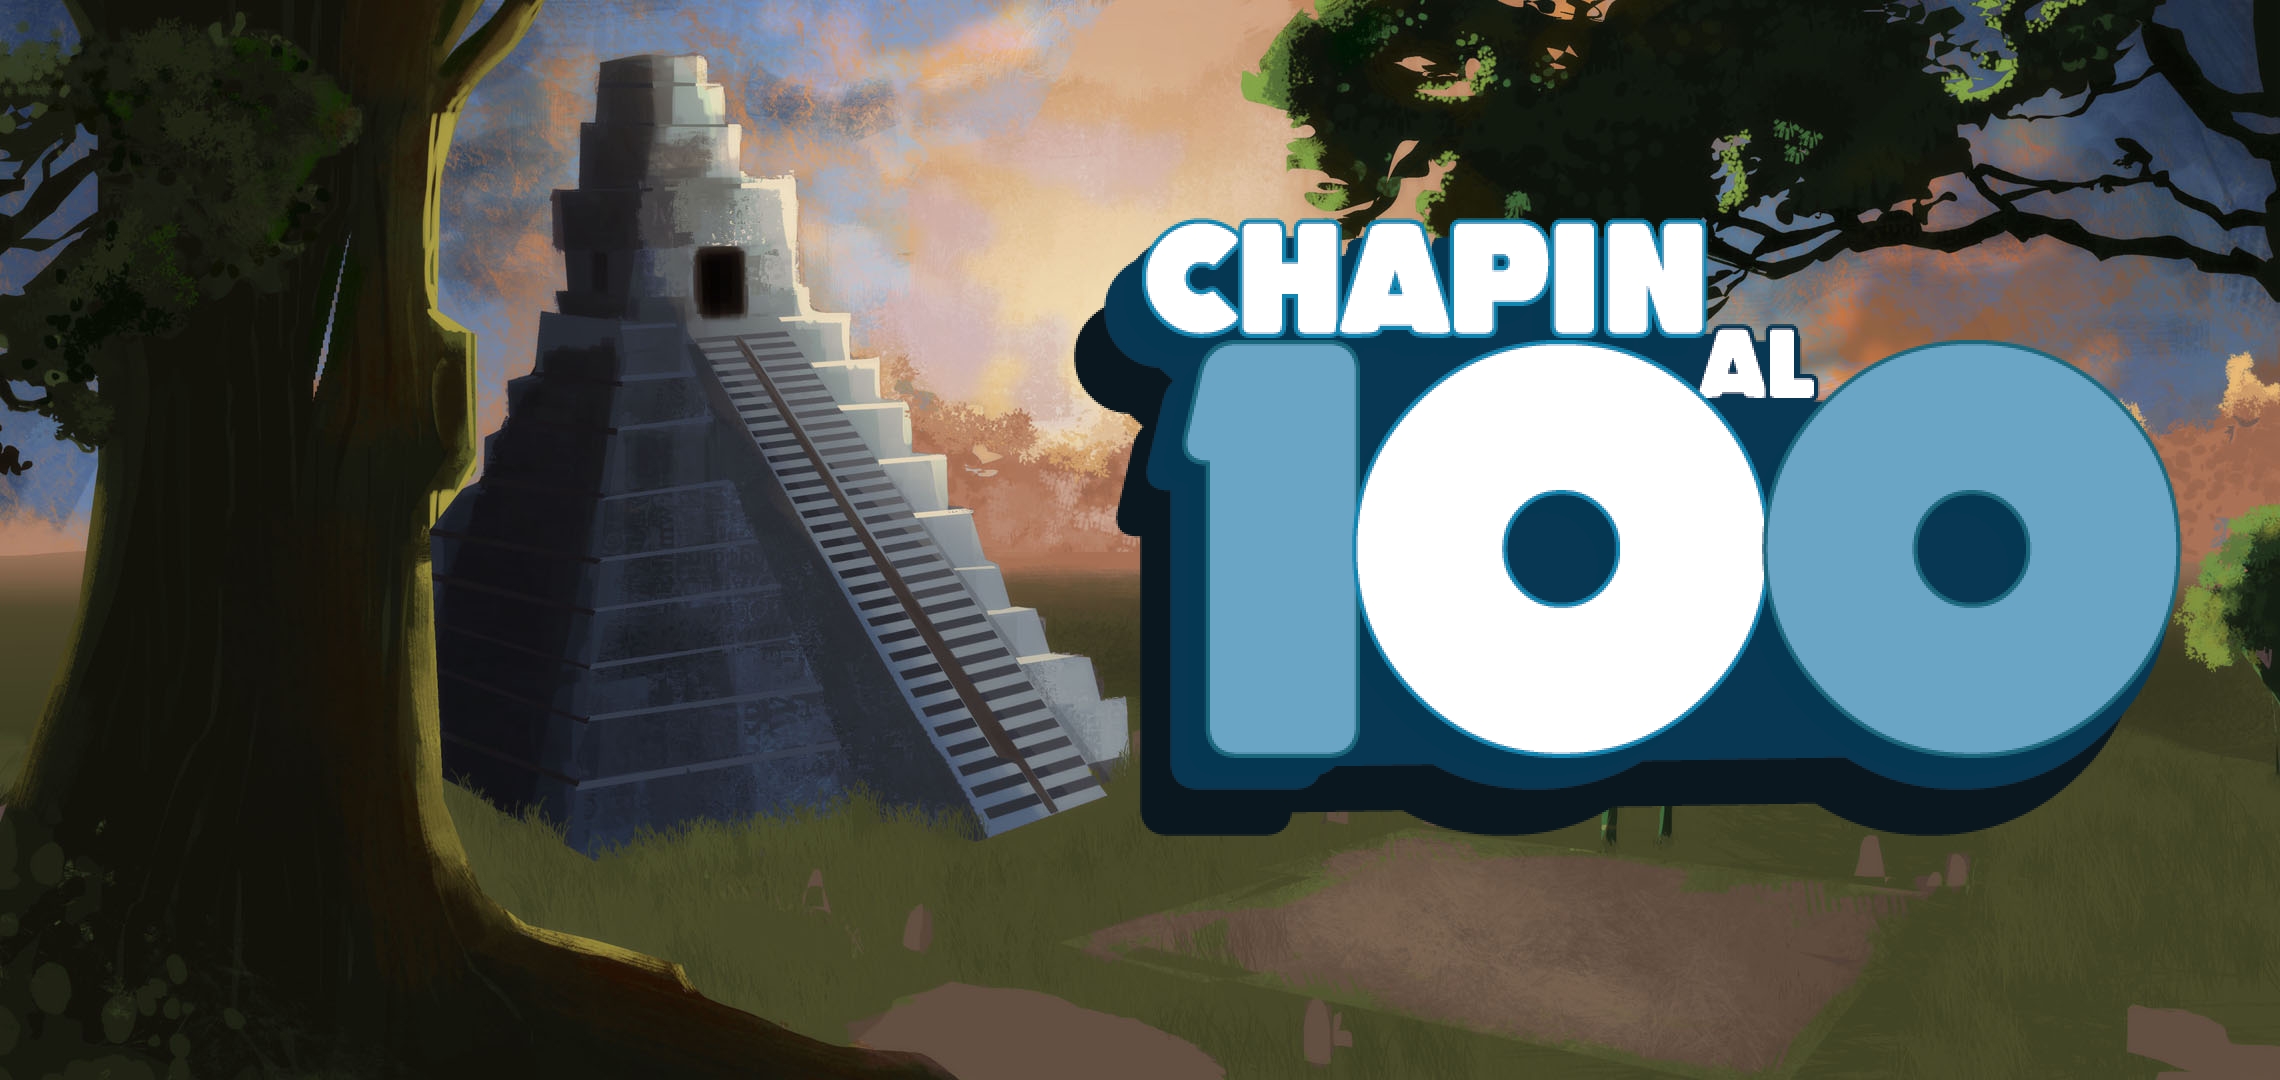 Chapin Al 100!